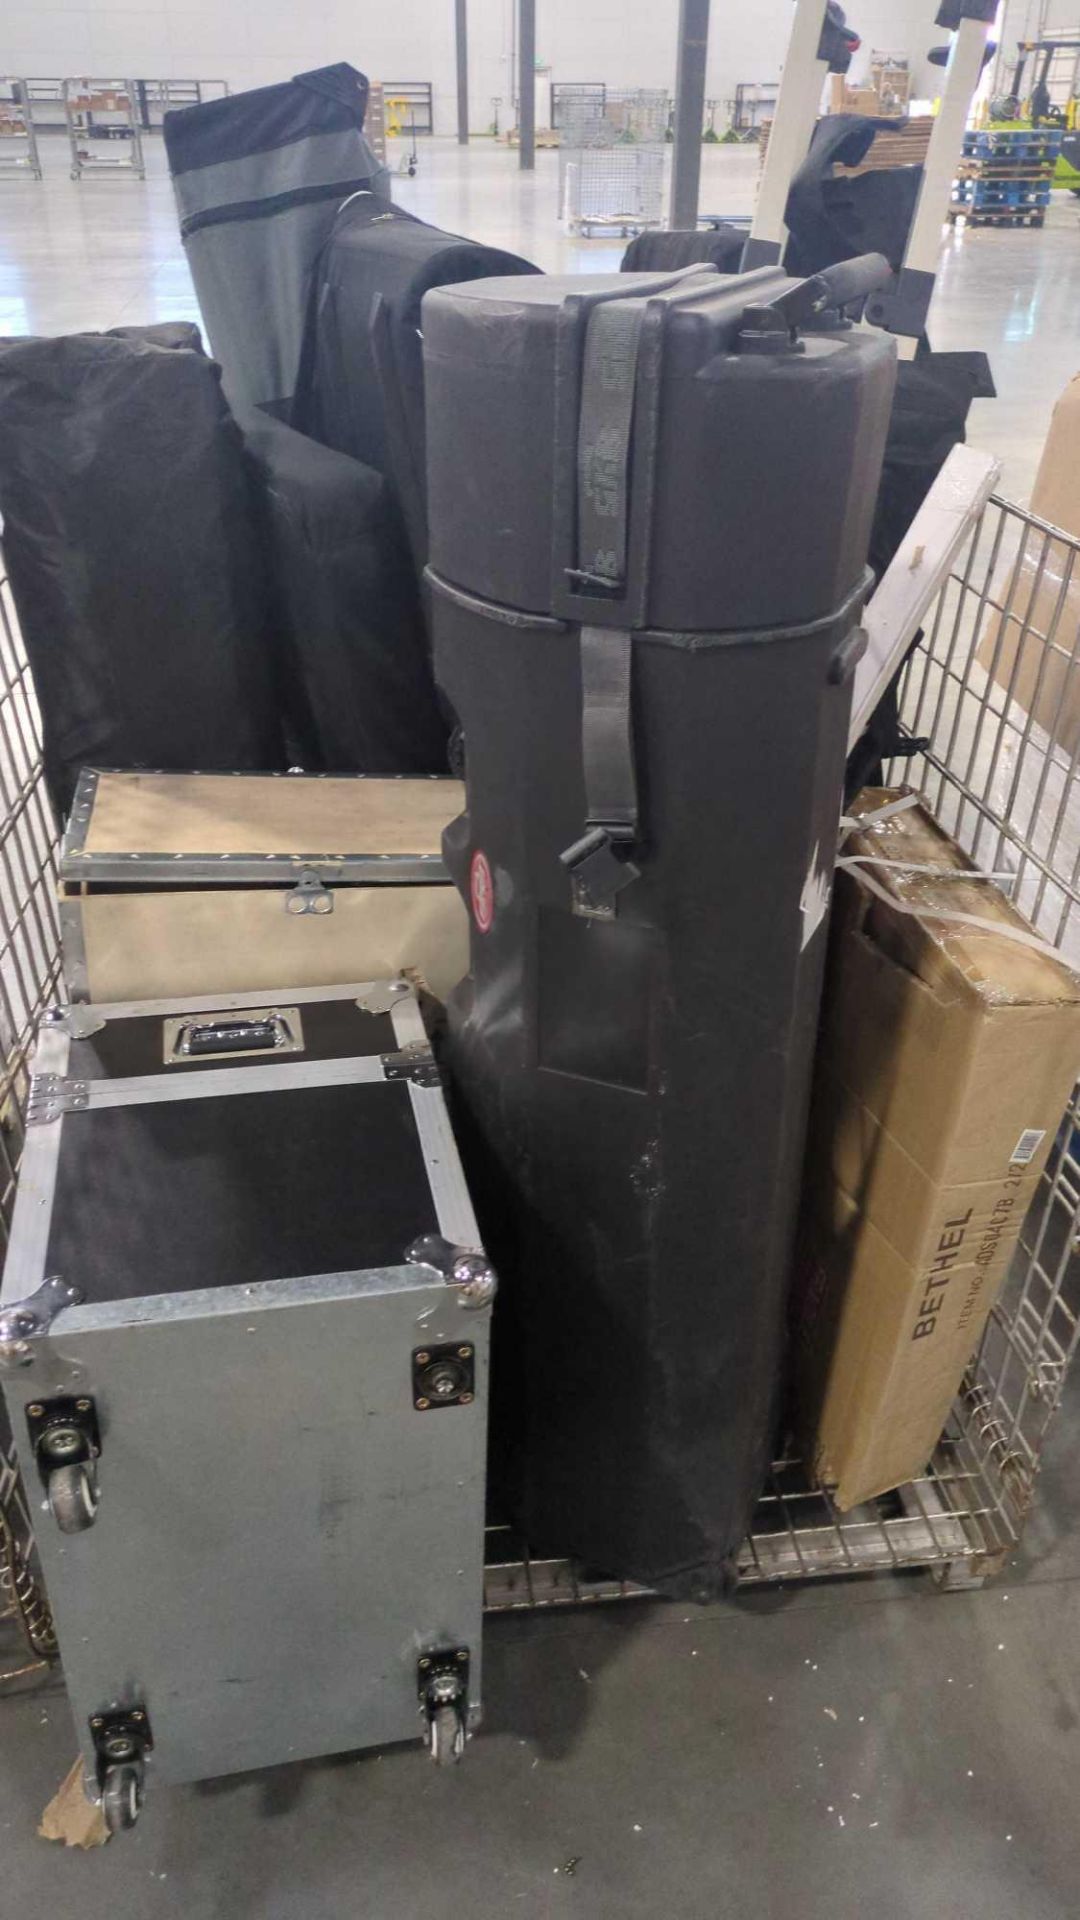 tripod, canopies, black case, vevor heavy duty arbor press 3 ton, fuguang battery tester? - Image 12 of 12